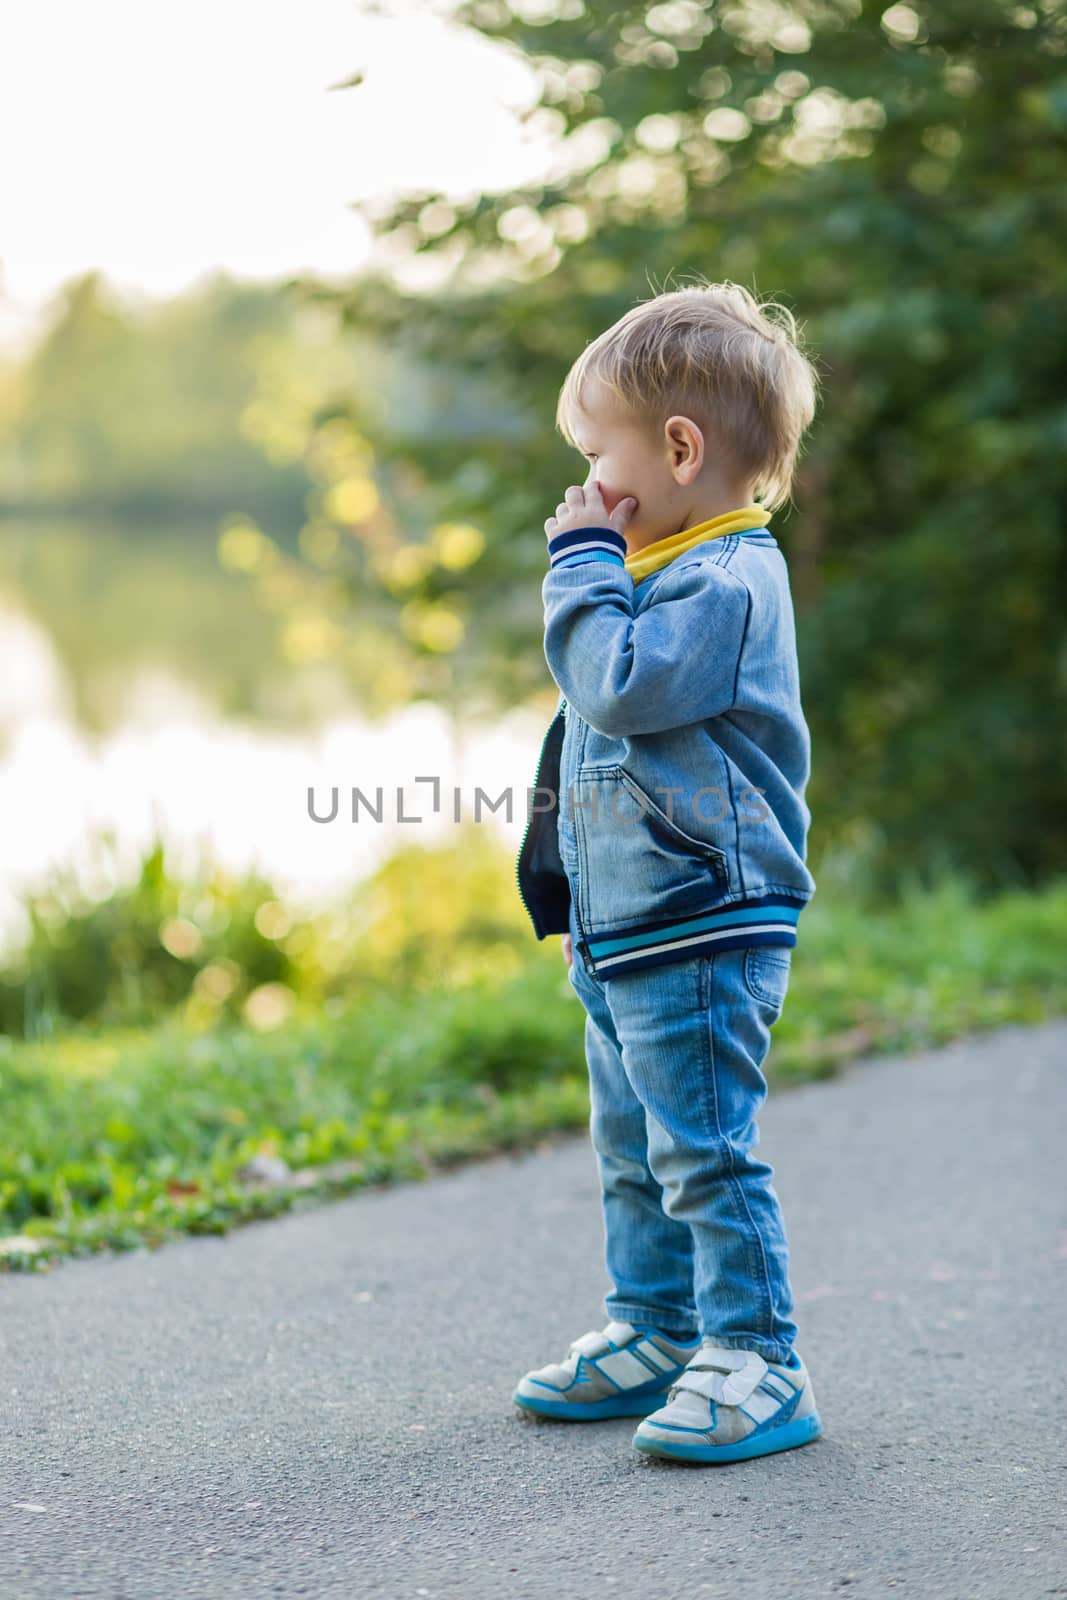 Little boy near a pond in a city park one autumn evening. by galinasharapova